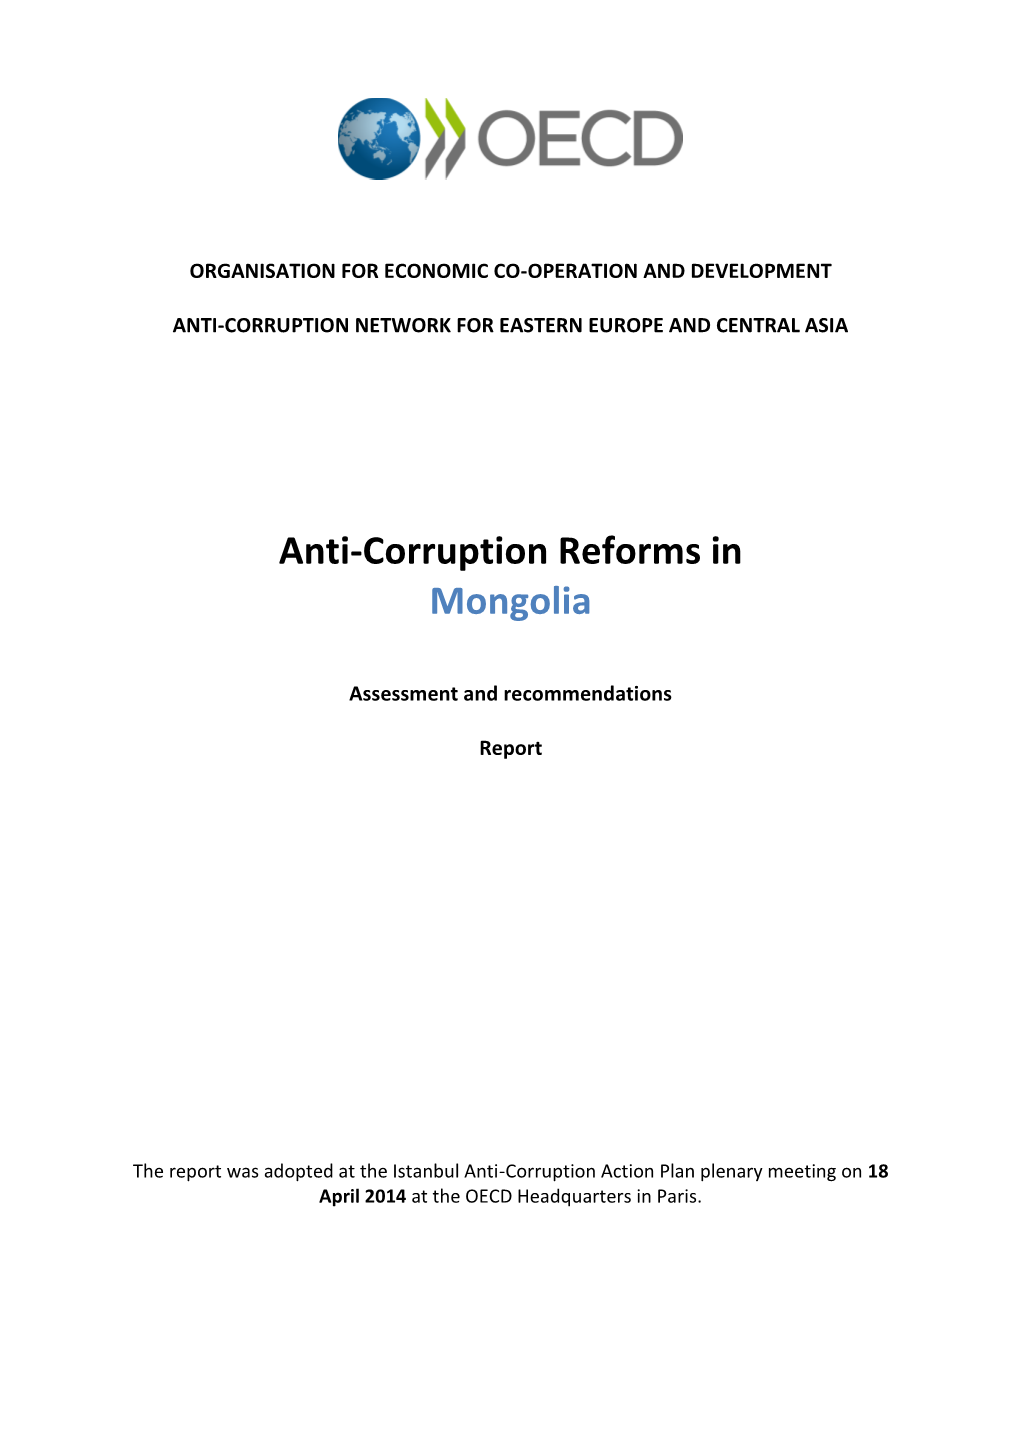 Anti-Corruption Reforms in Mongolia